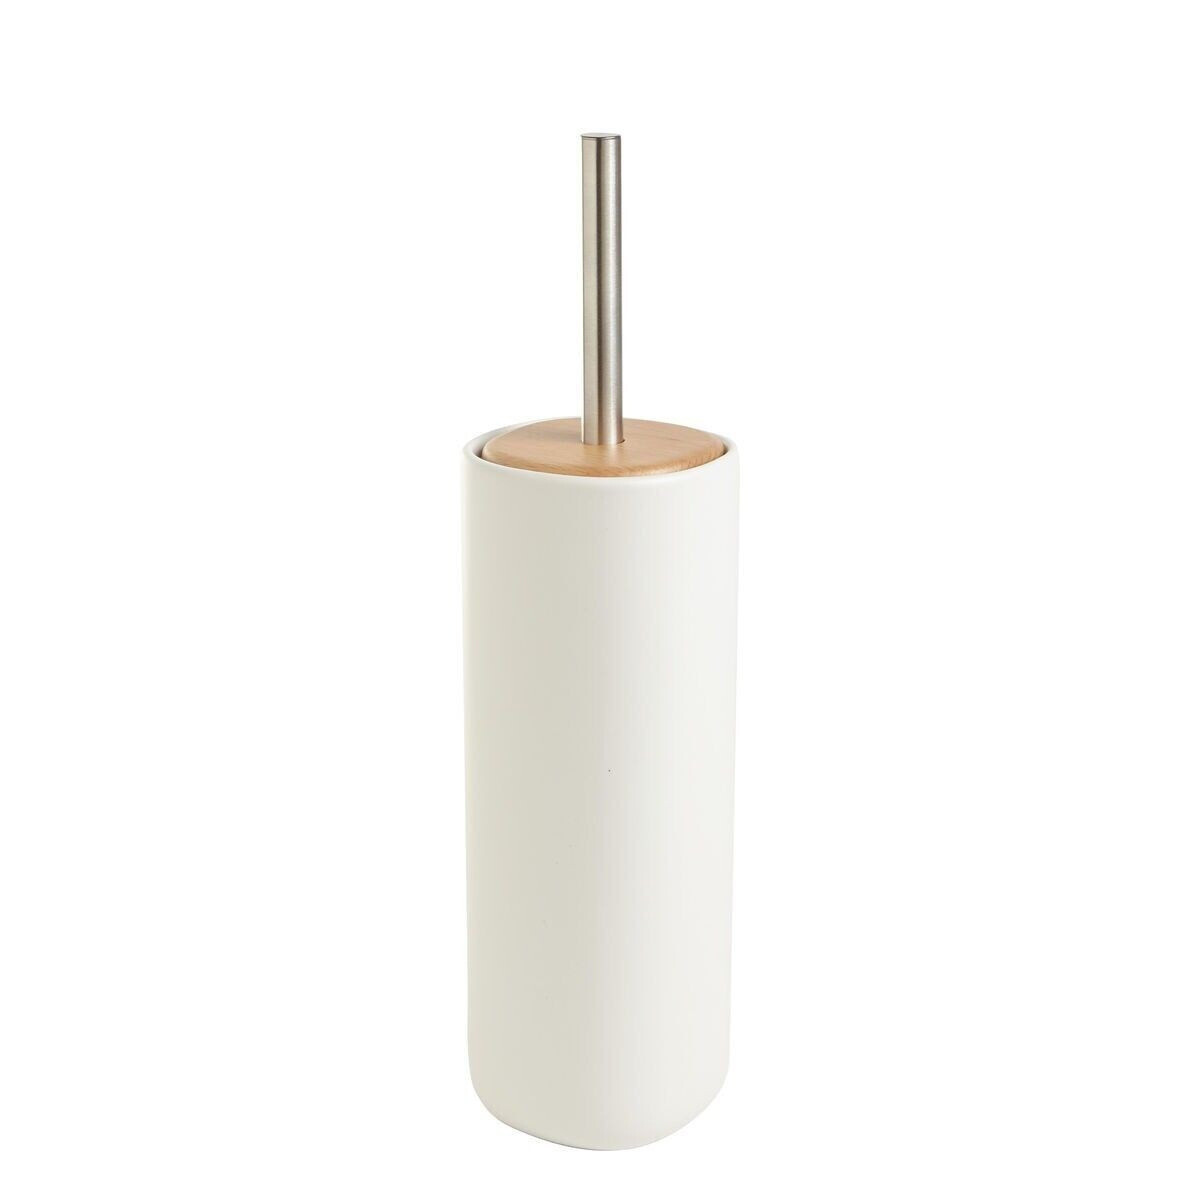 Loft ceramic toilet brush holder, White / Brown, large image number 0